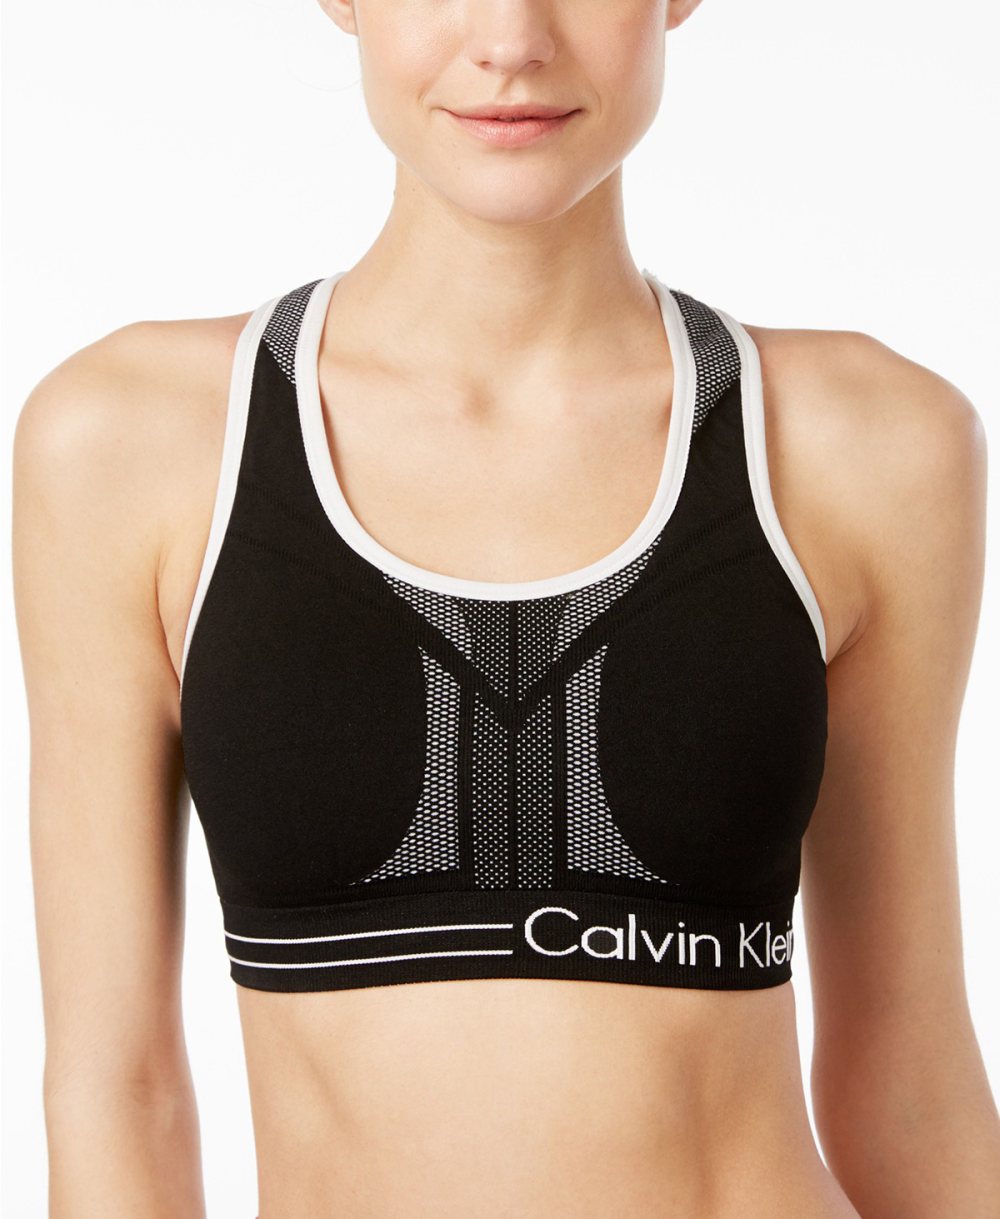 Calvin Klein Performance Modular Strappy Sports Bra in black  Calvin klein  outfits, Sports bra outfit, Calvin klein sports bra